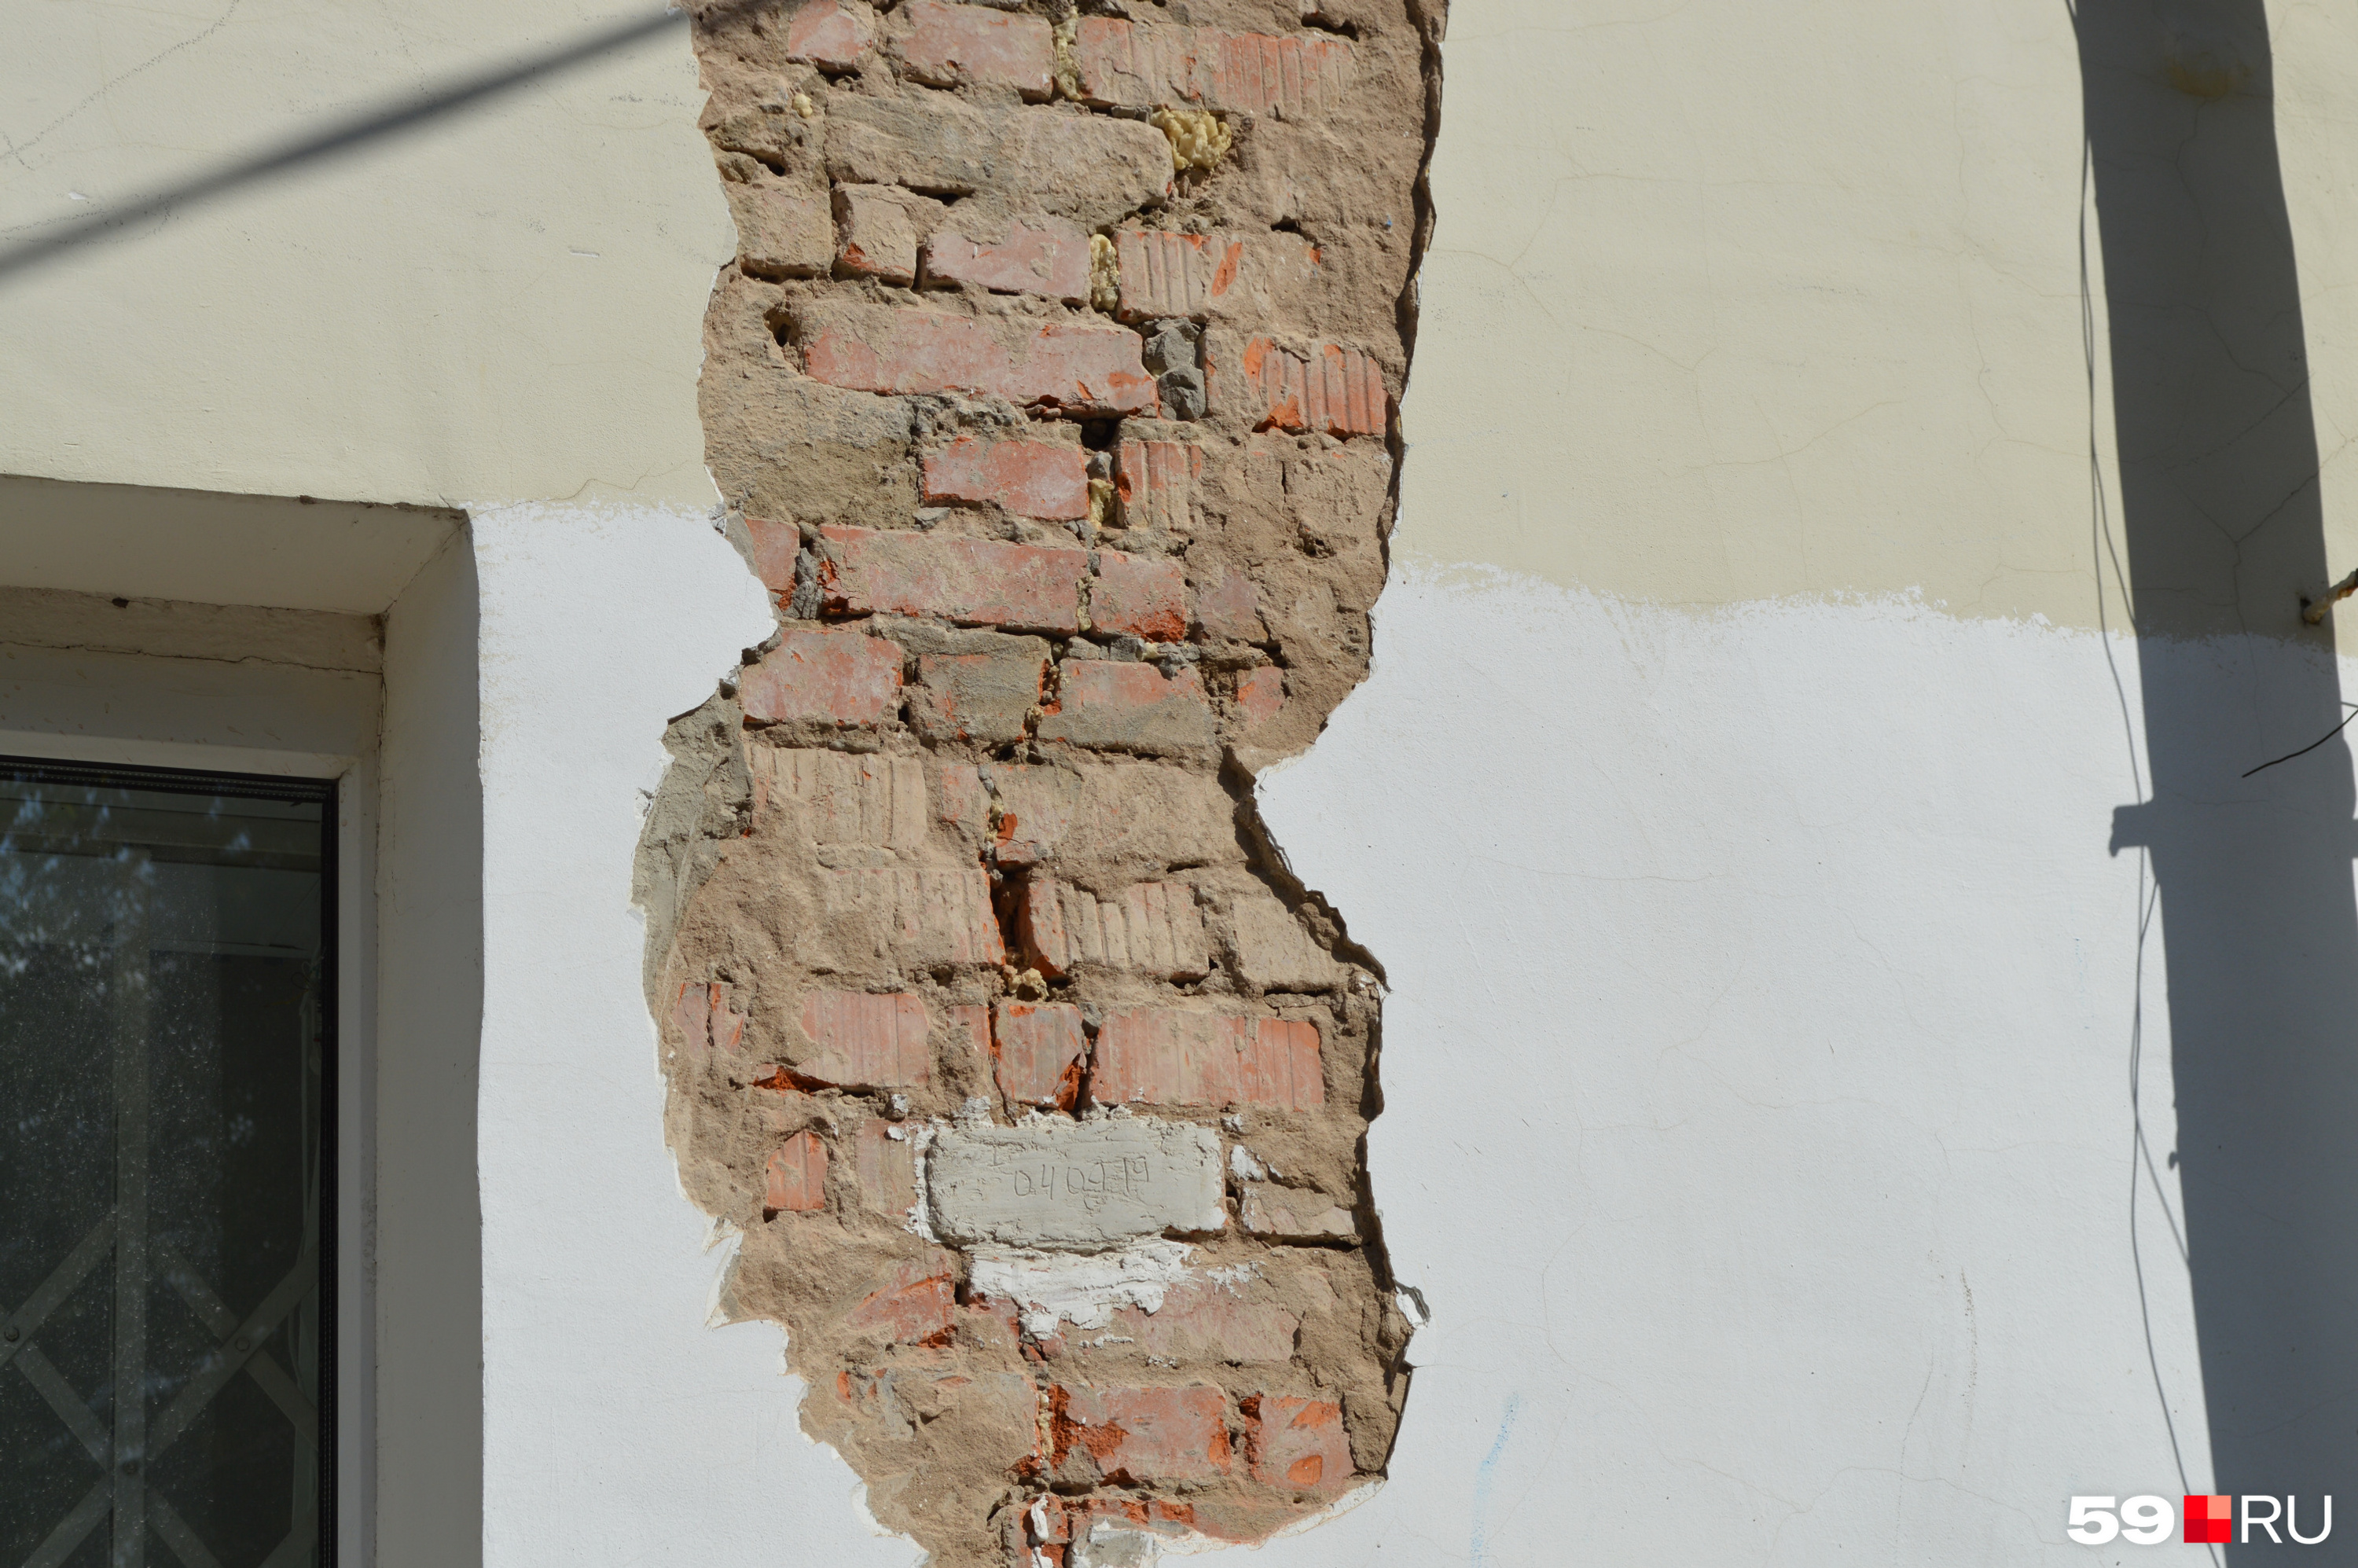 Сквозная трещина в стене. Трещина в кирпичной стене. Сквозные трещины в кирпичной стене. Вертикальные трещины в стенах. Трещина в многоквартирном доме из кирпича.